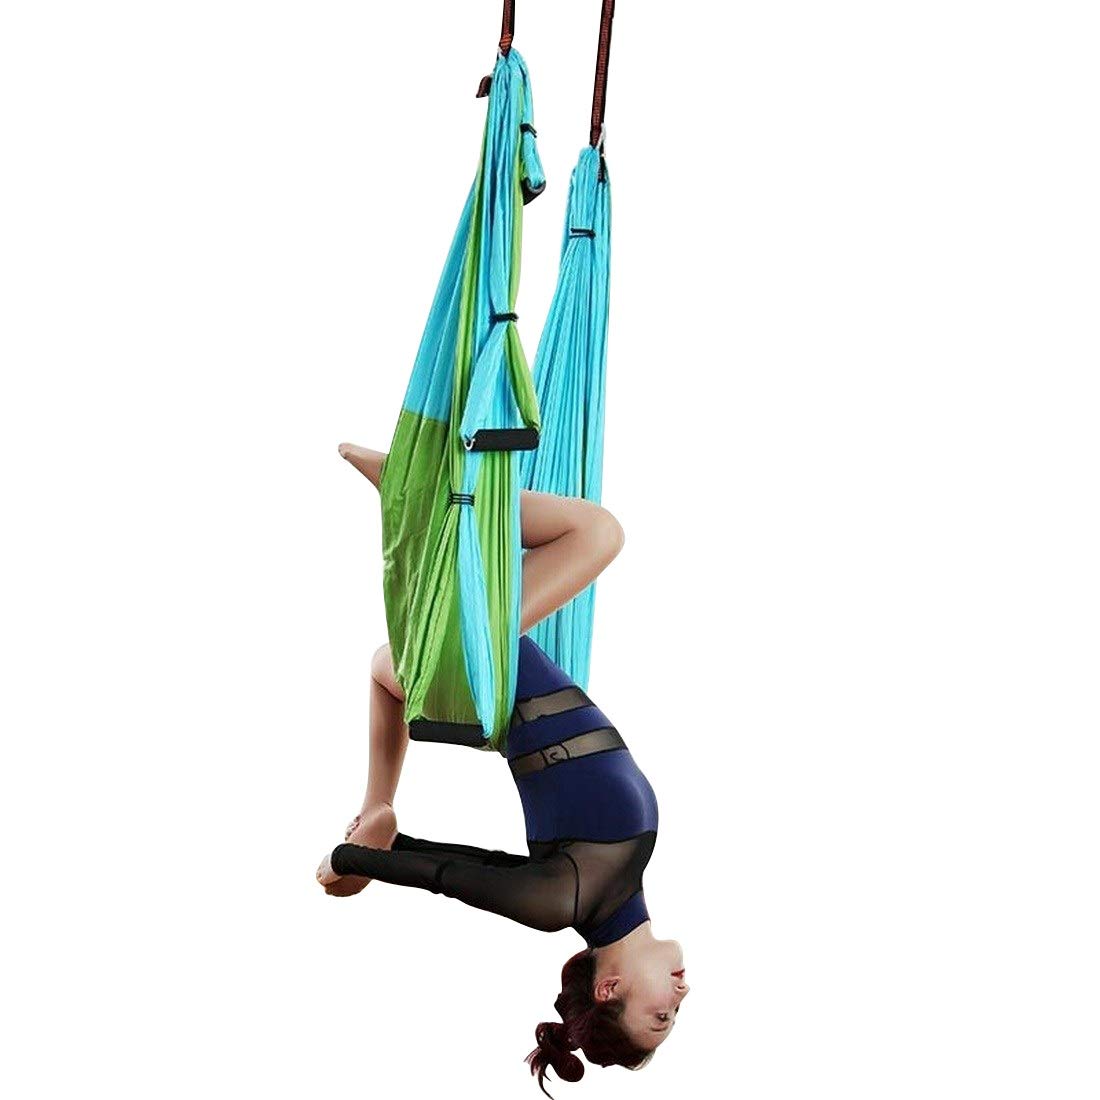 Kajuer Aerial Yoga Swing Set with Extension Straps